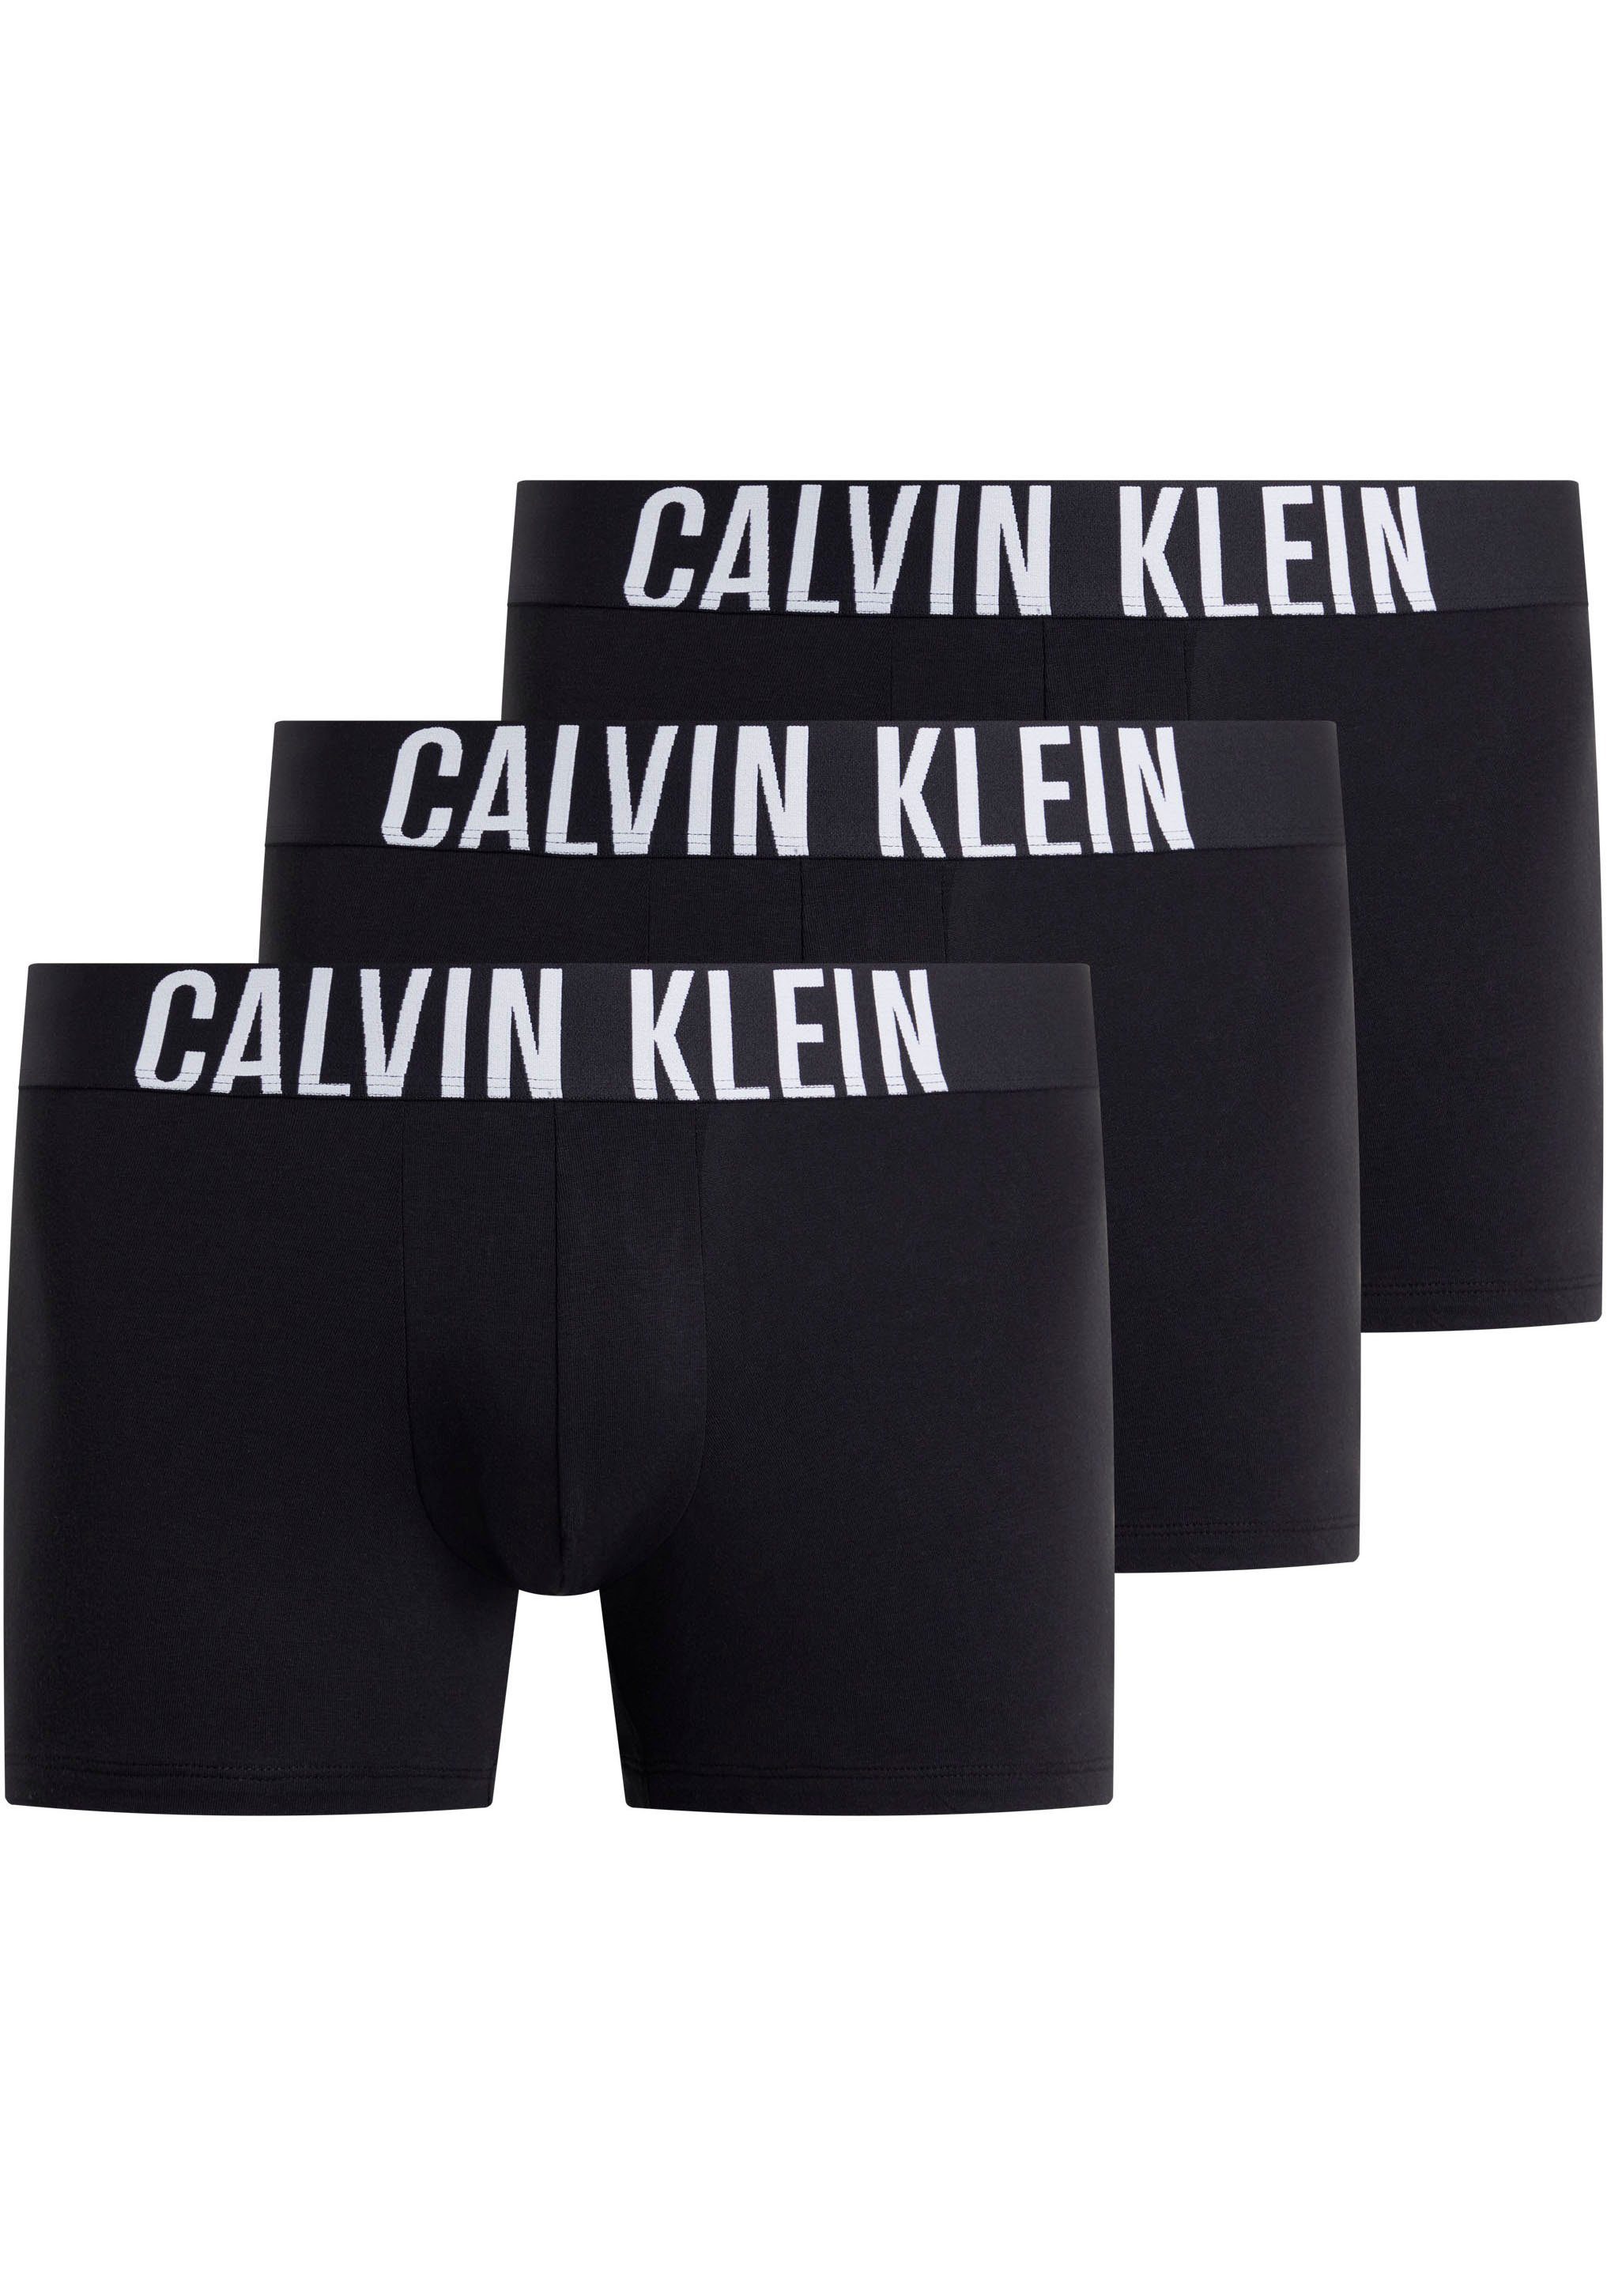 Calvin Klein Trunk 3PK in grote maten (3 stuks Set van 3)